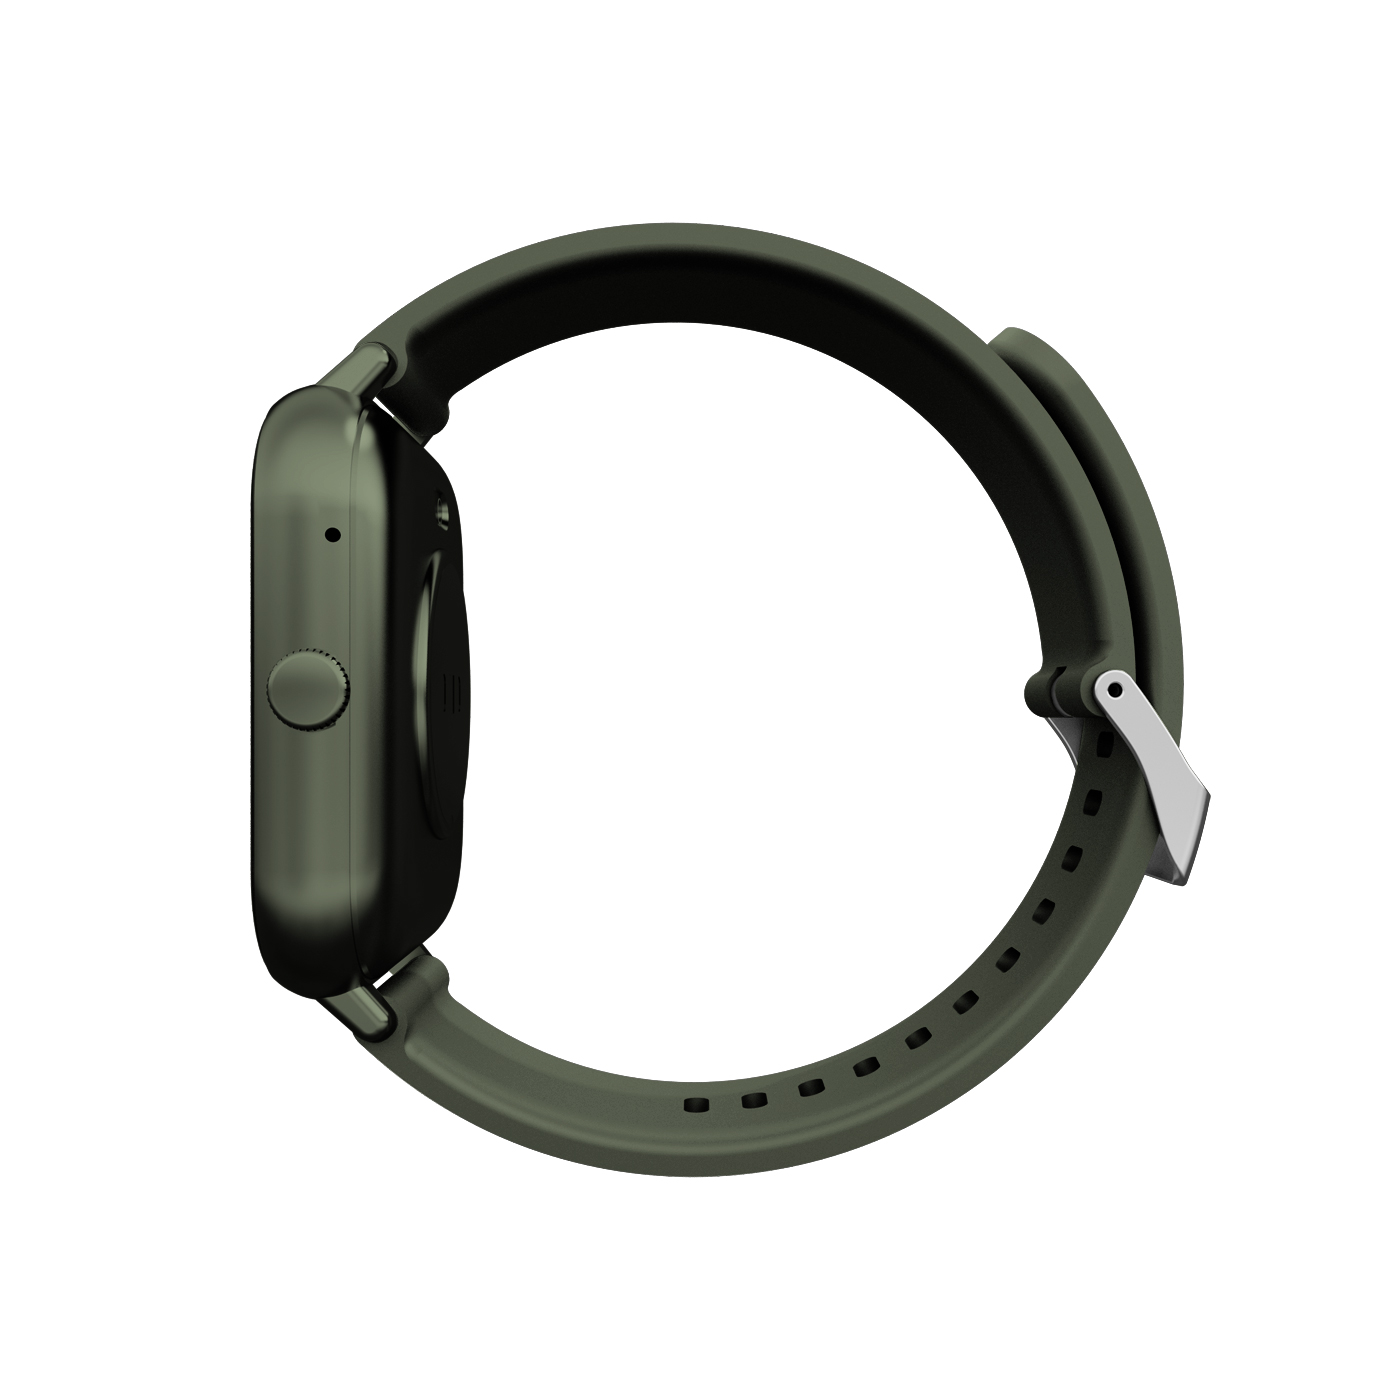 Buytech smartwatch cassa verde green cinturino in silicone BY-ALFA-GR